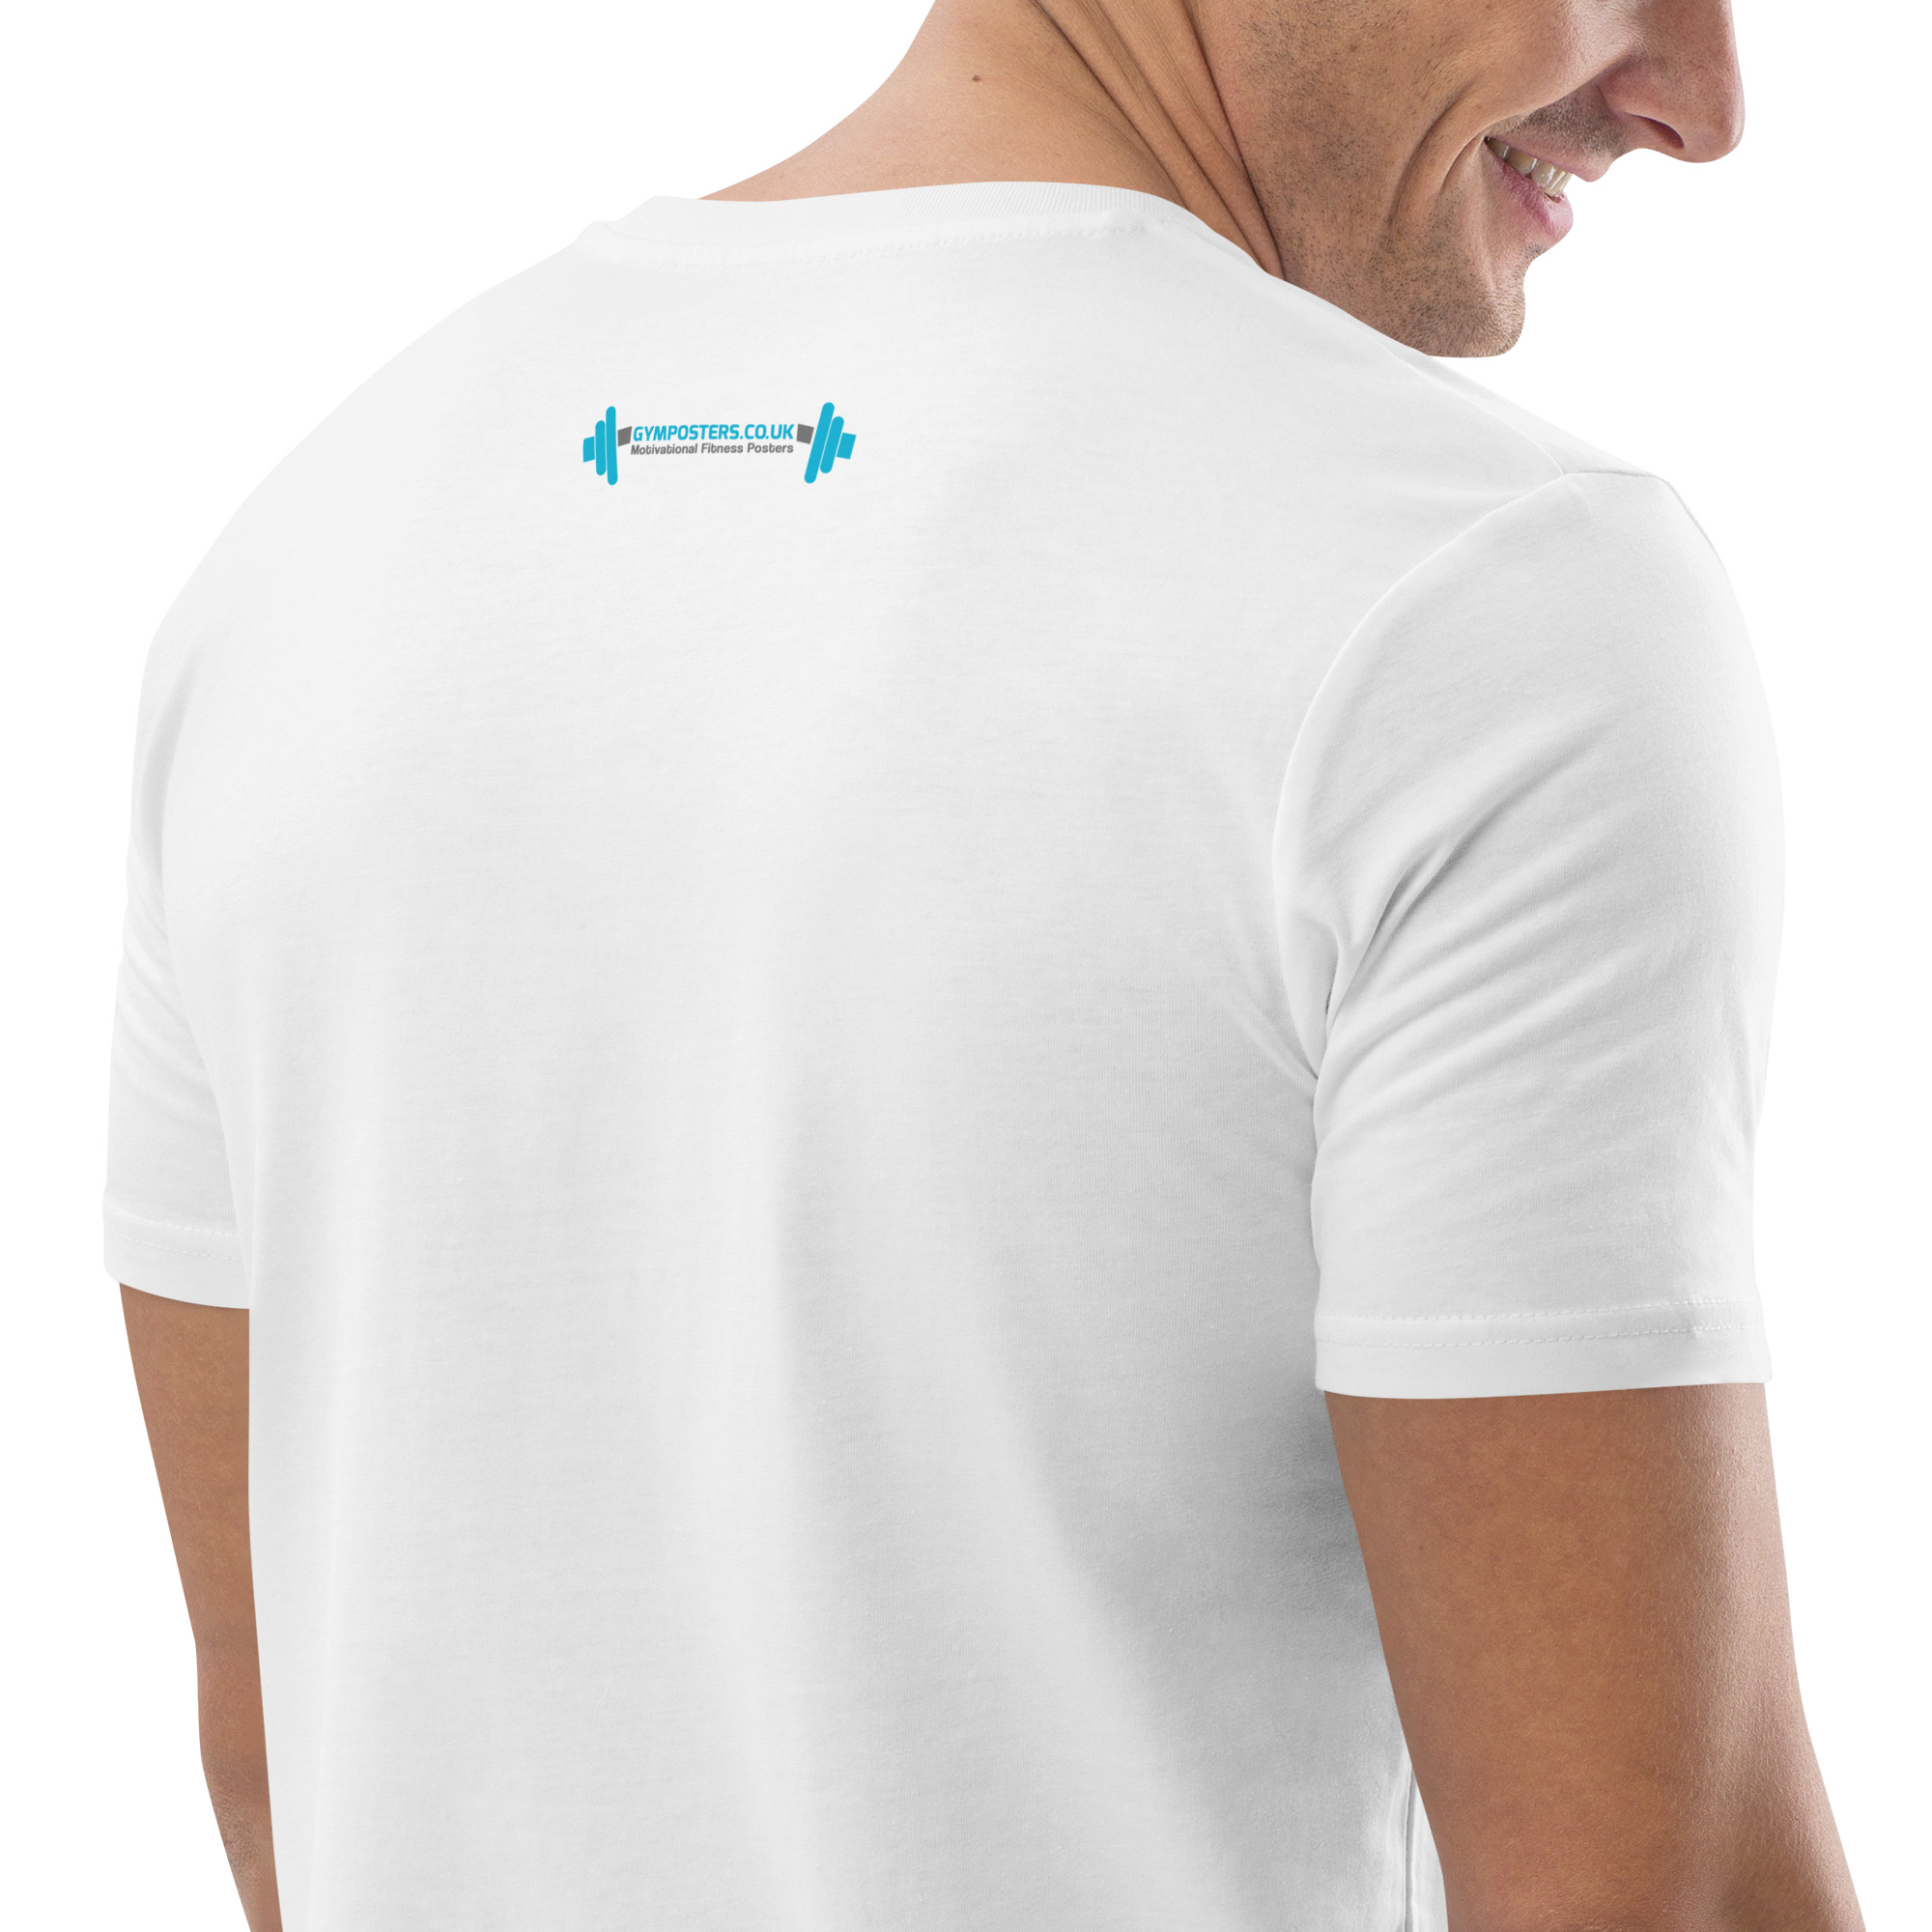 unisex-organic-cotton-t-shirt-white-zoomed-in-3-6578476c3edbb.jpg